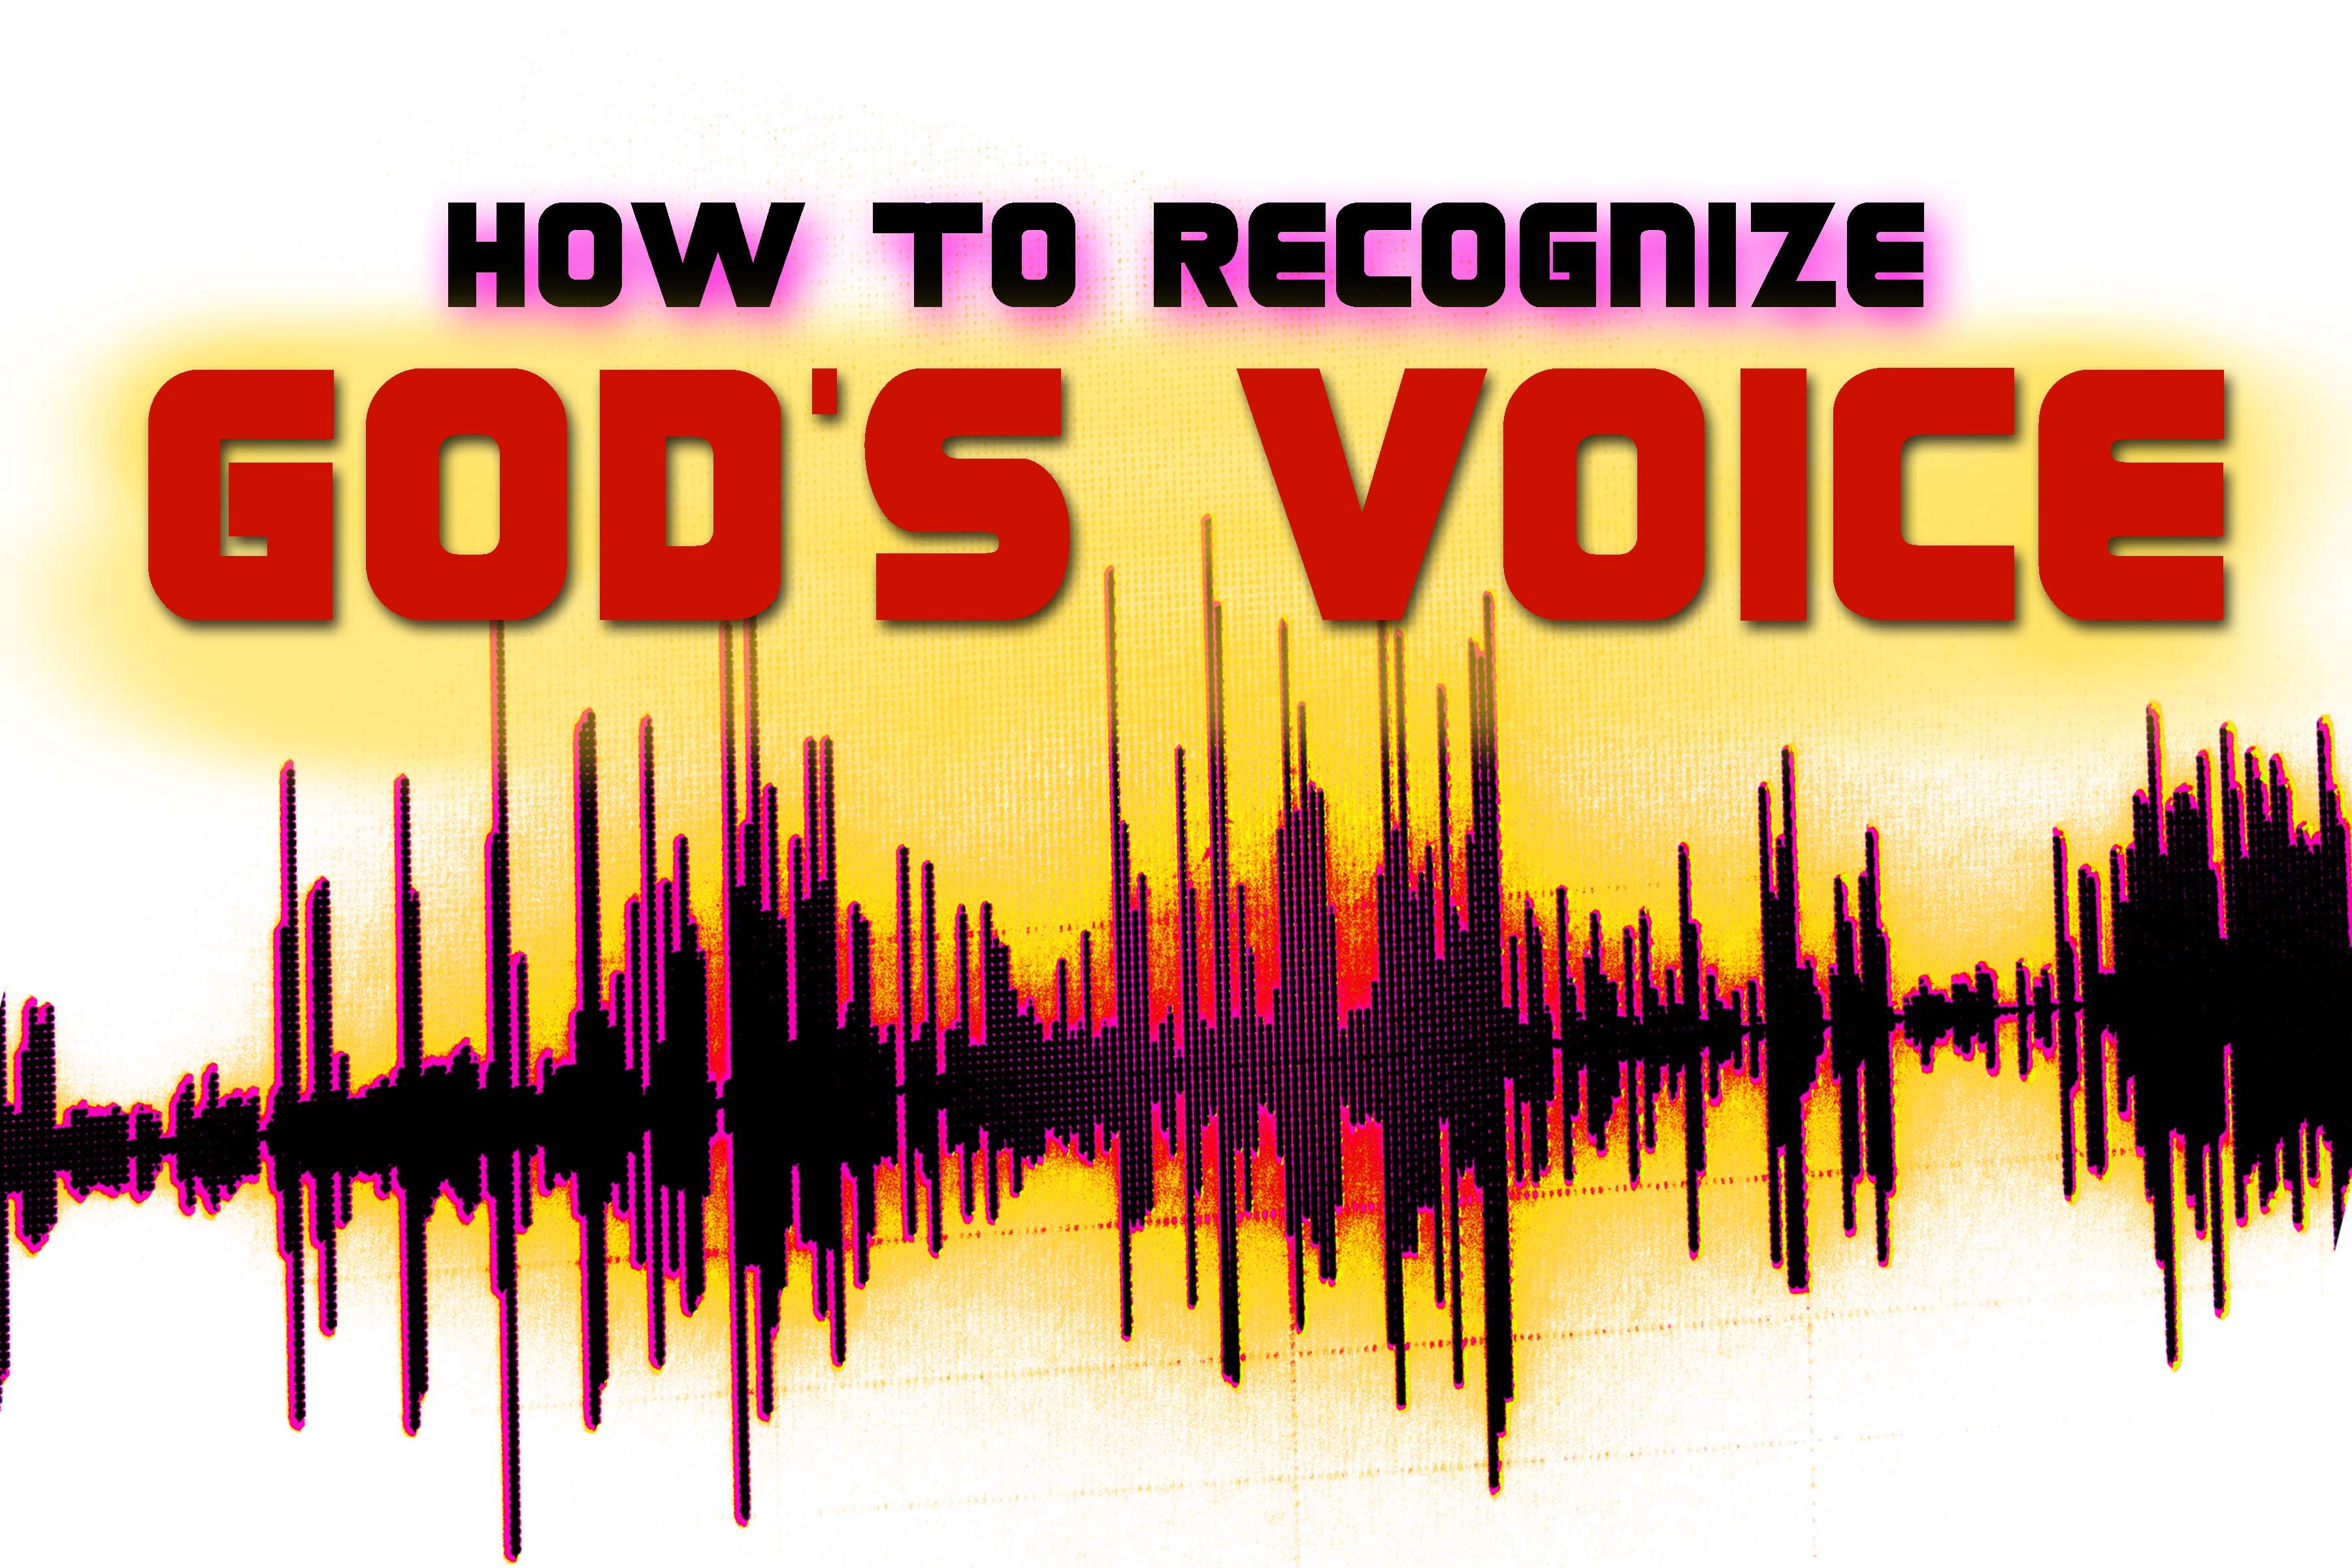 11-19-17 How To Recognize God's Voice - Part 1